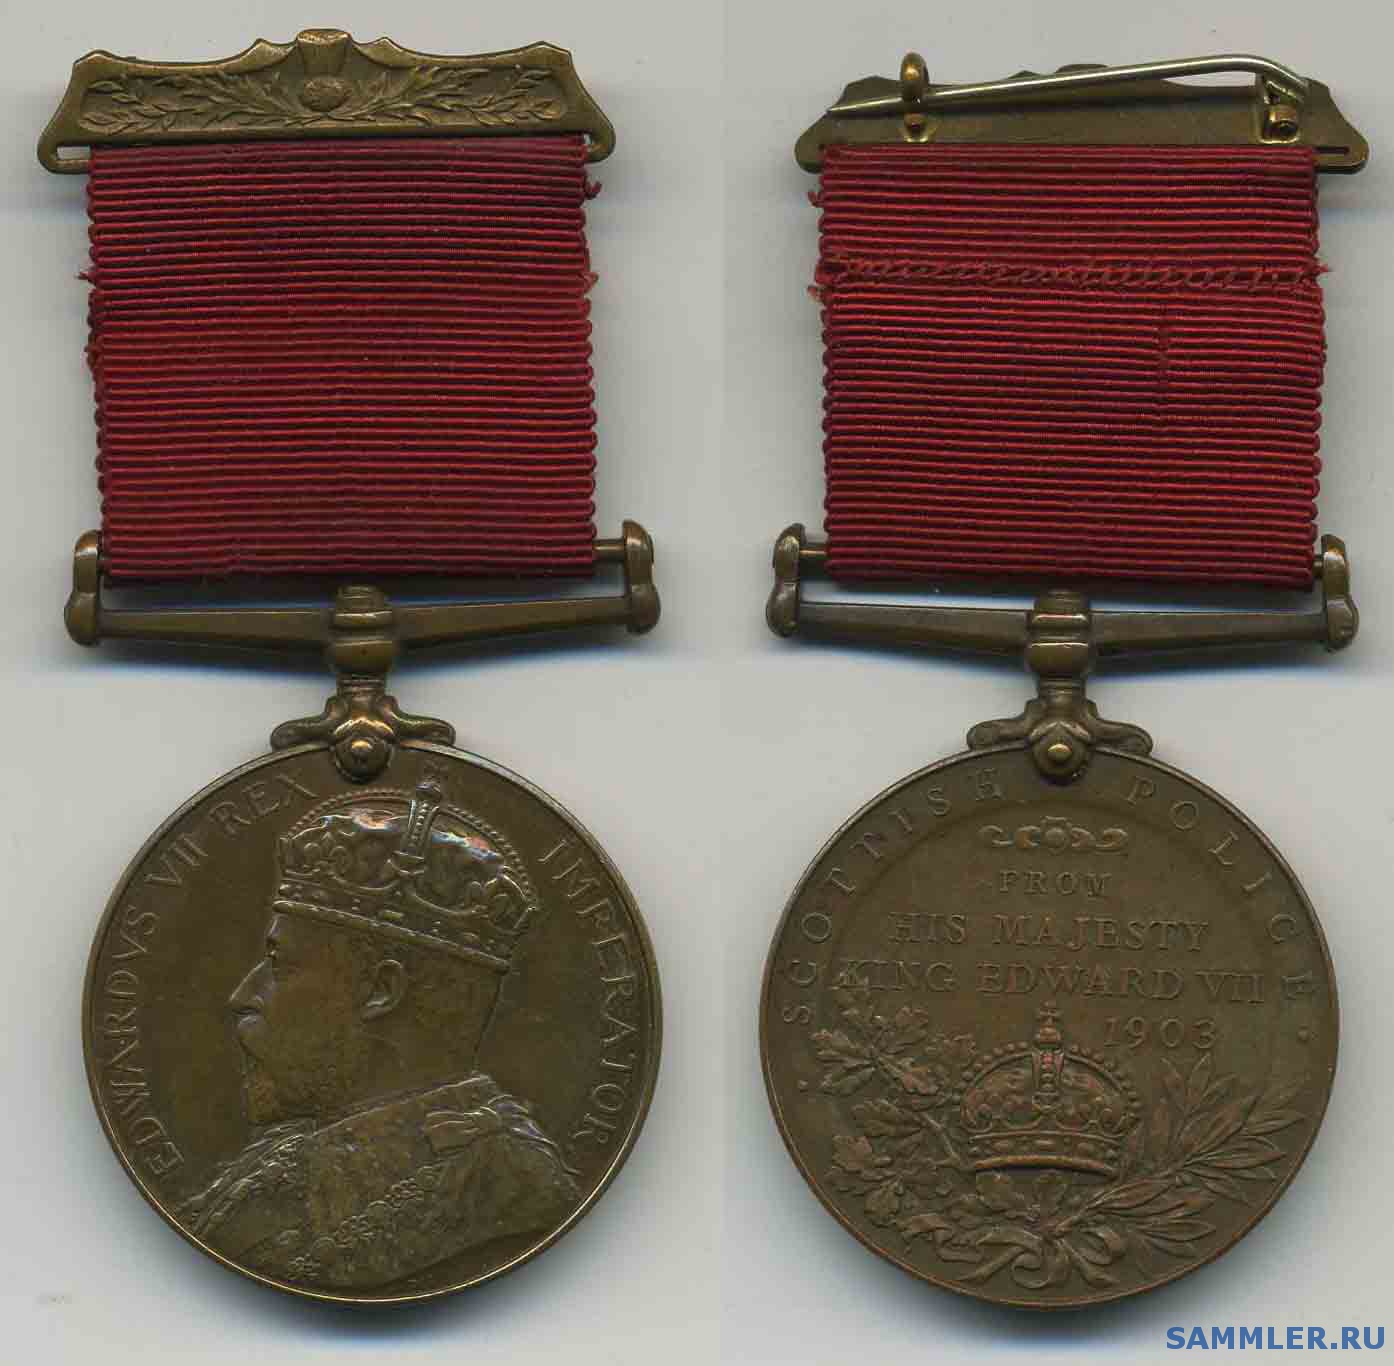 Visit_to_Scotland_Medal_1903.jpg